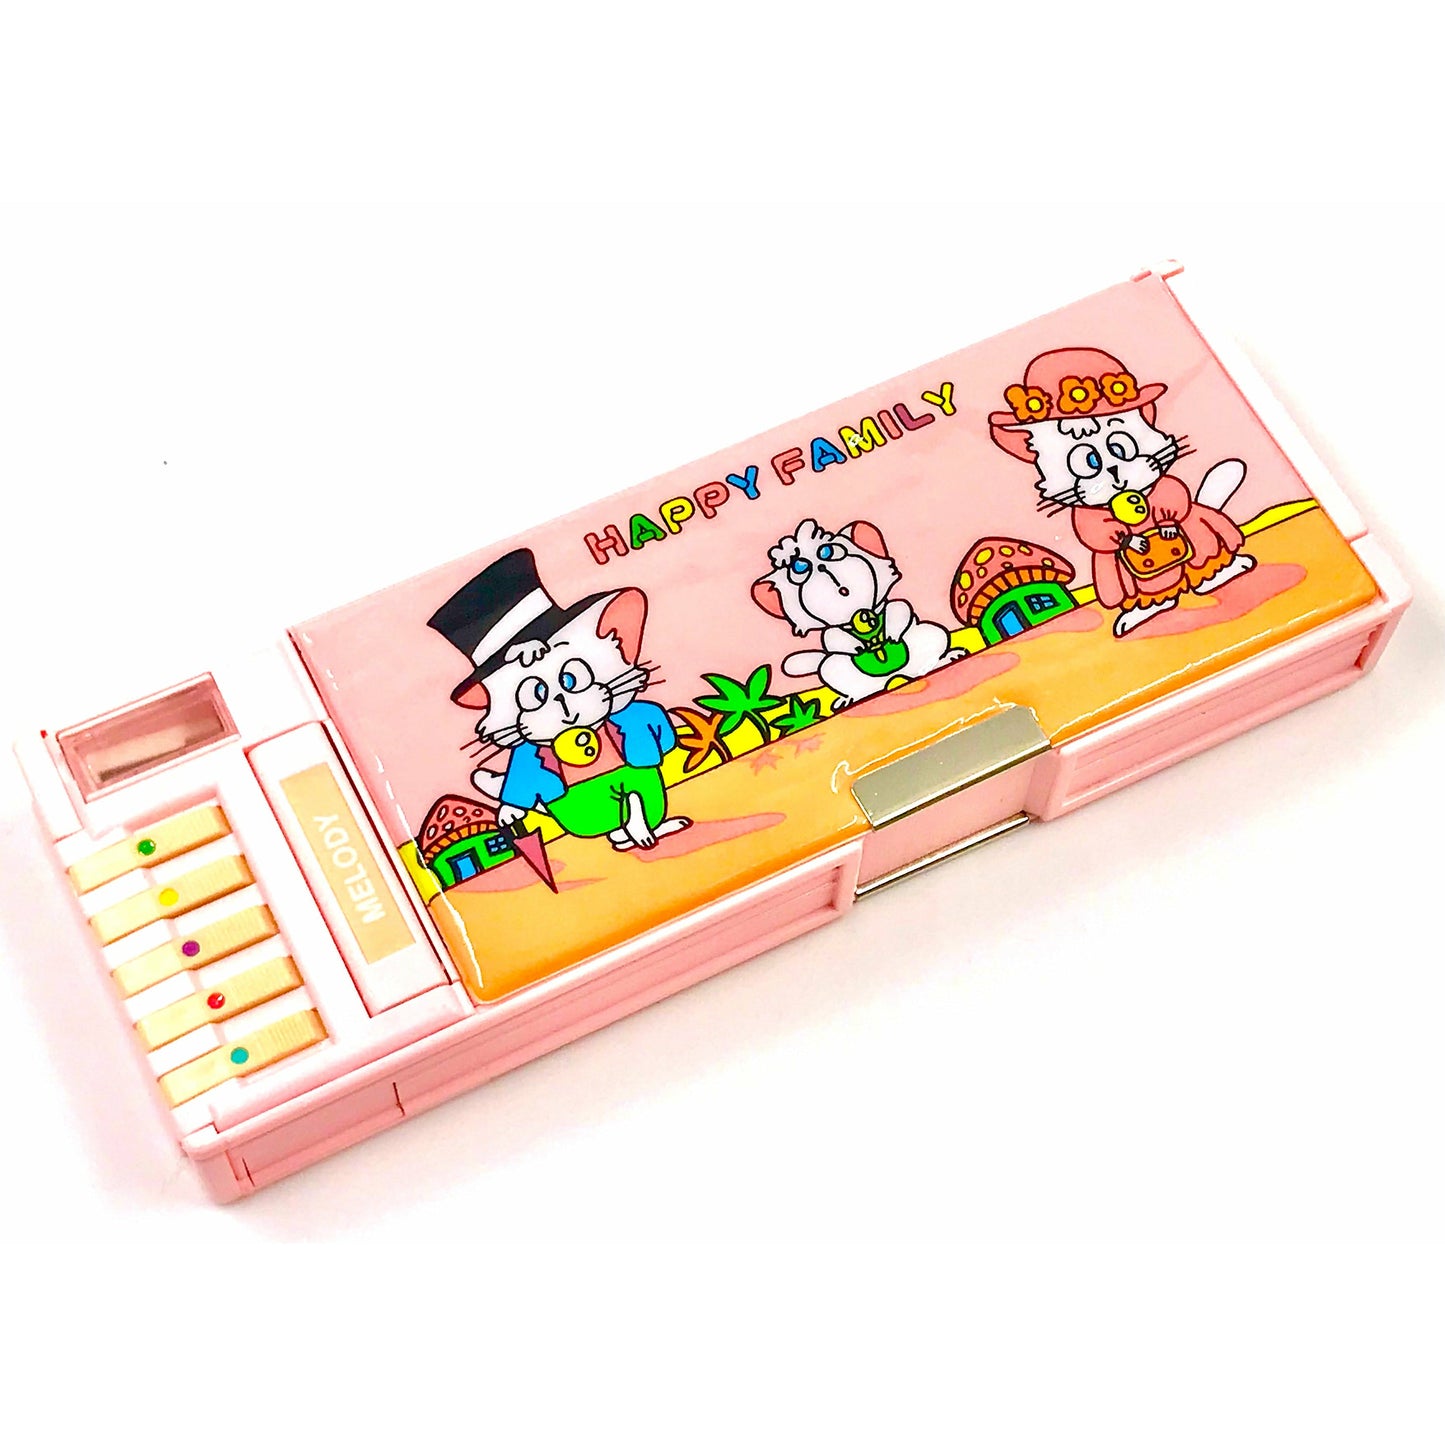 Melody Retro Push Button Pencil Case 24x9x3 cm  - 5 Multi-Function Buttons